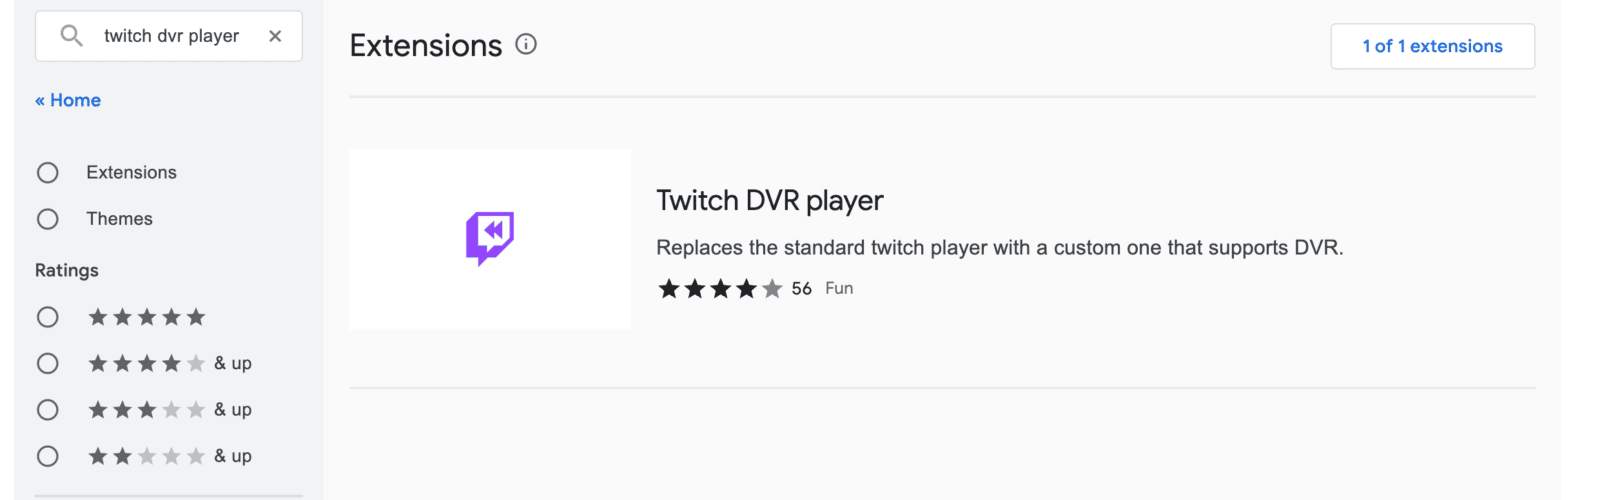 Twitch DVR player first result